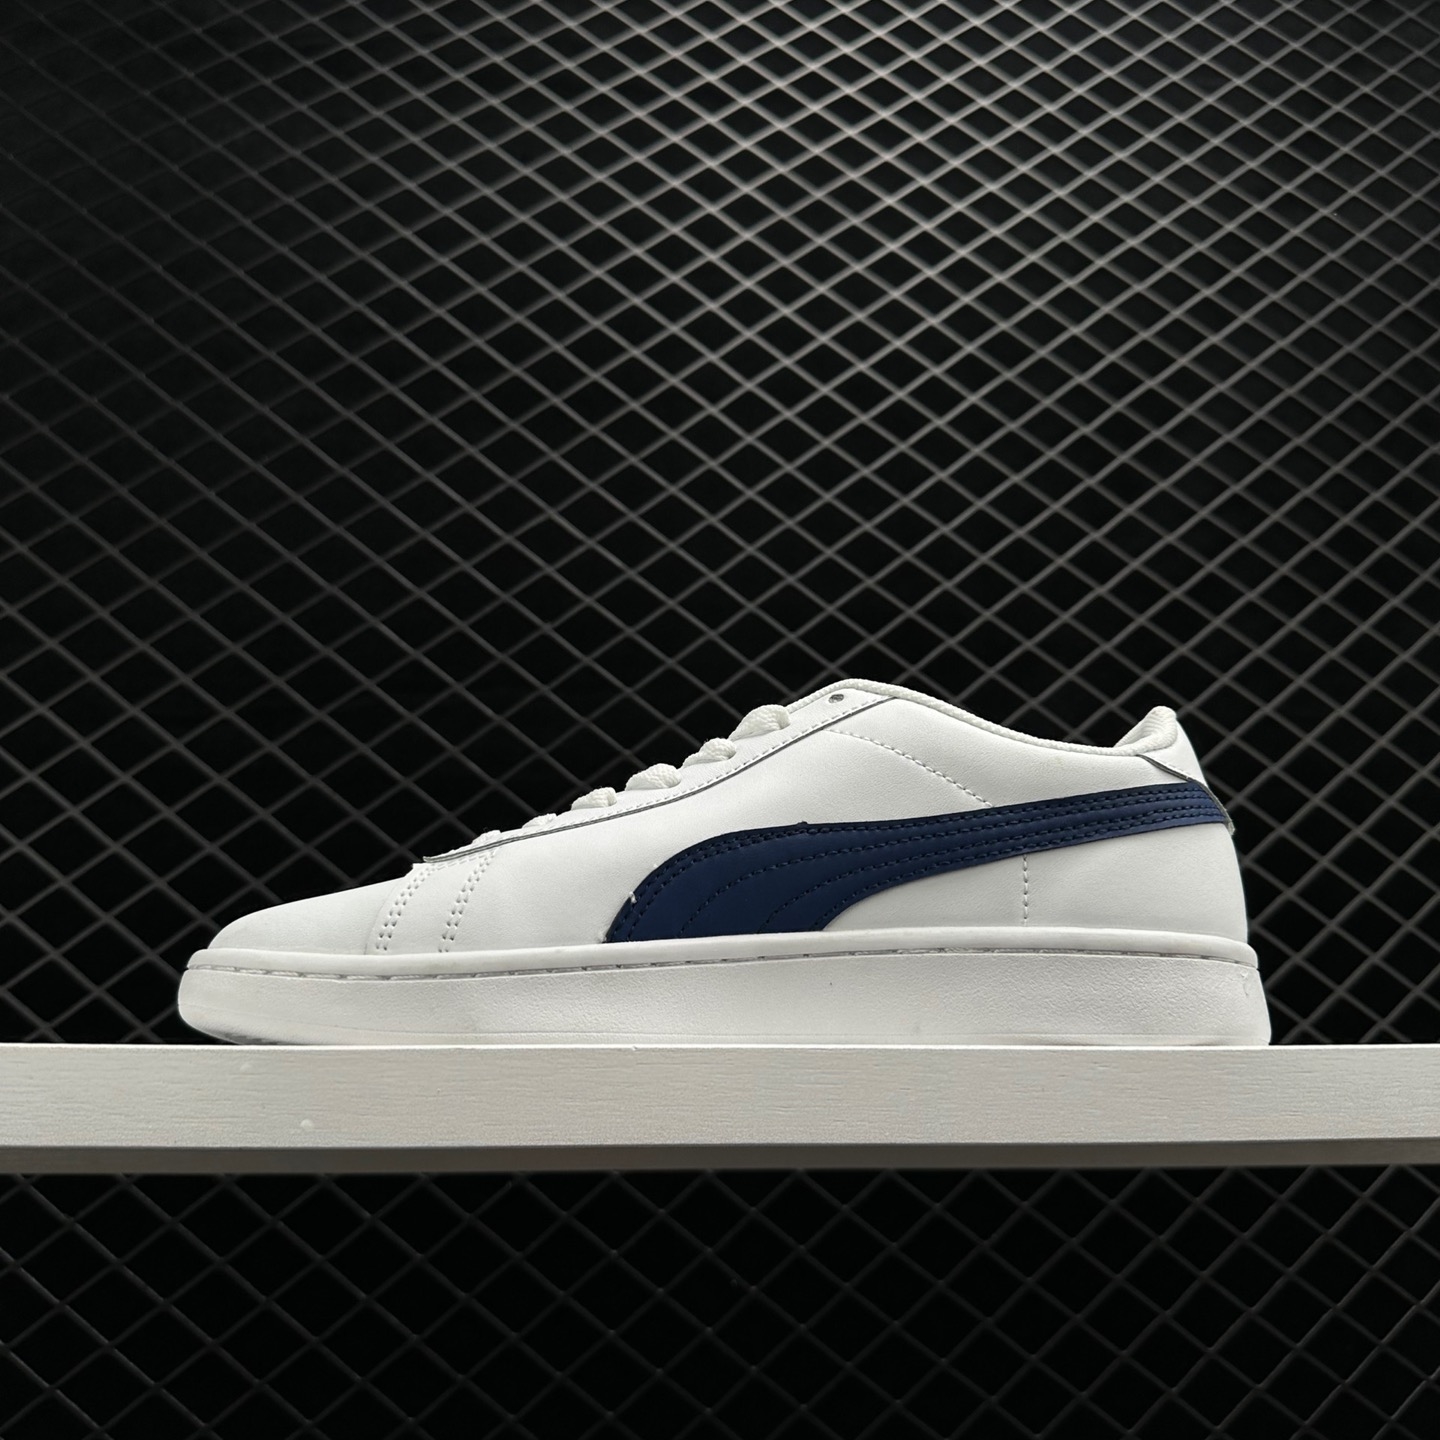 PUMA Smash V2 L White Blue 365215-02 | Stylish and Versatile Footwear